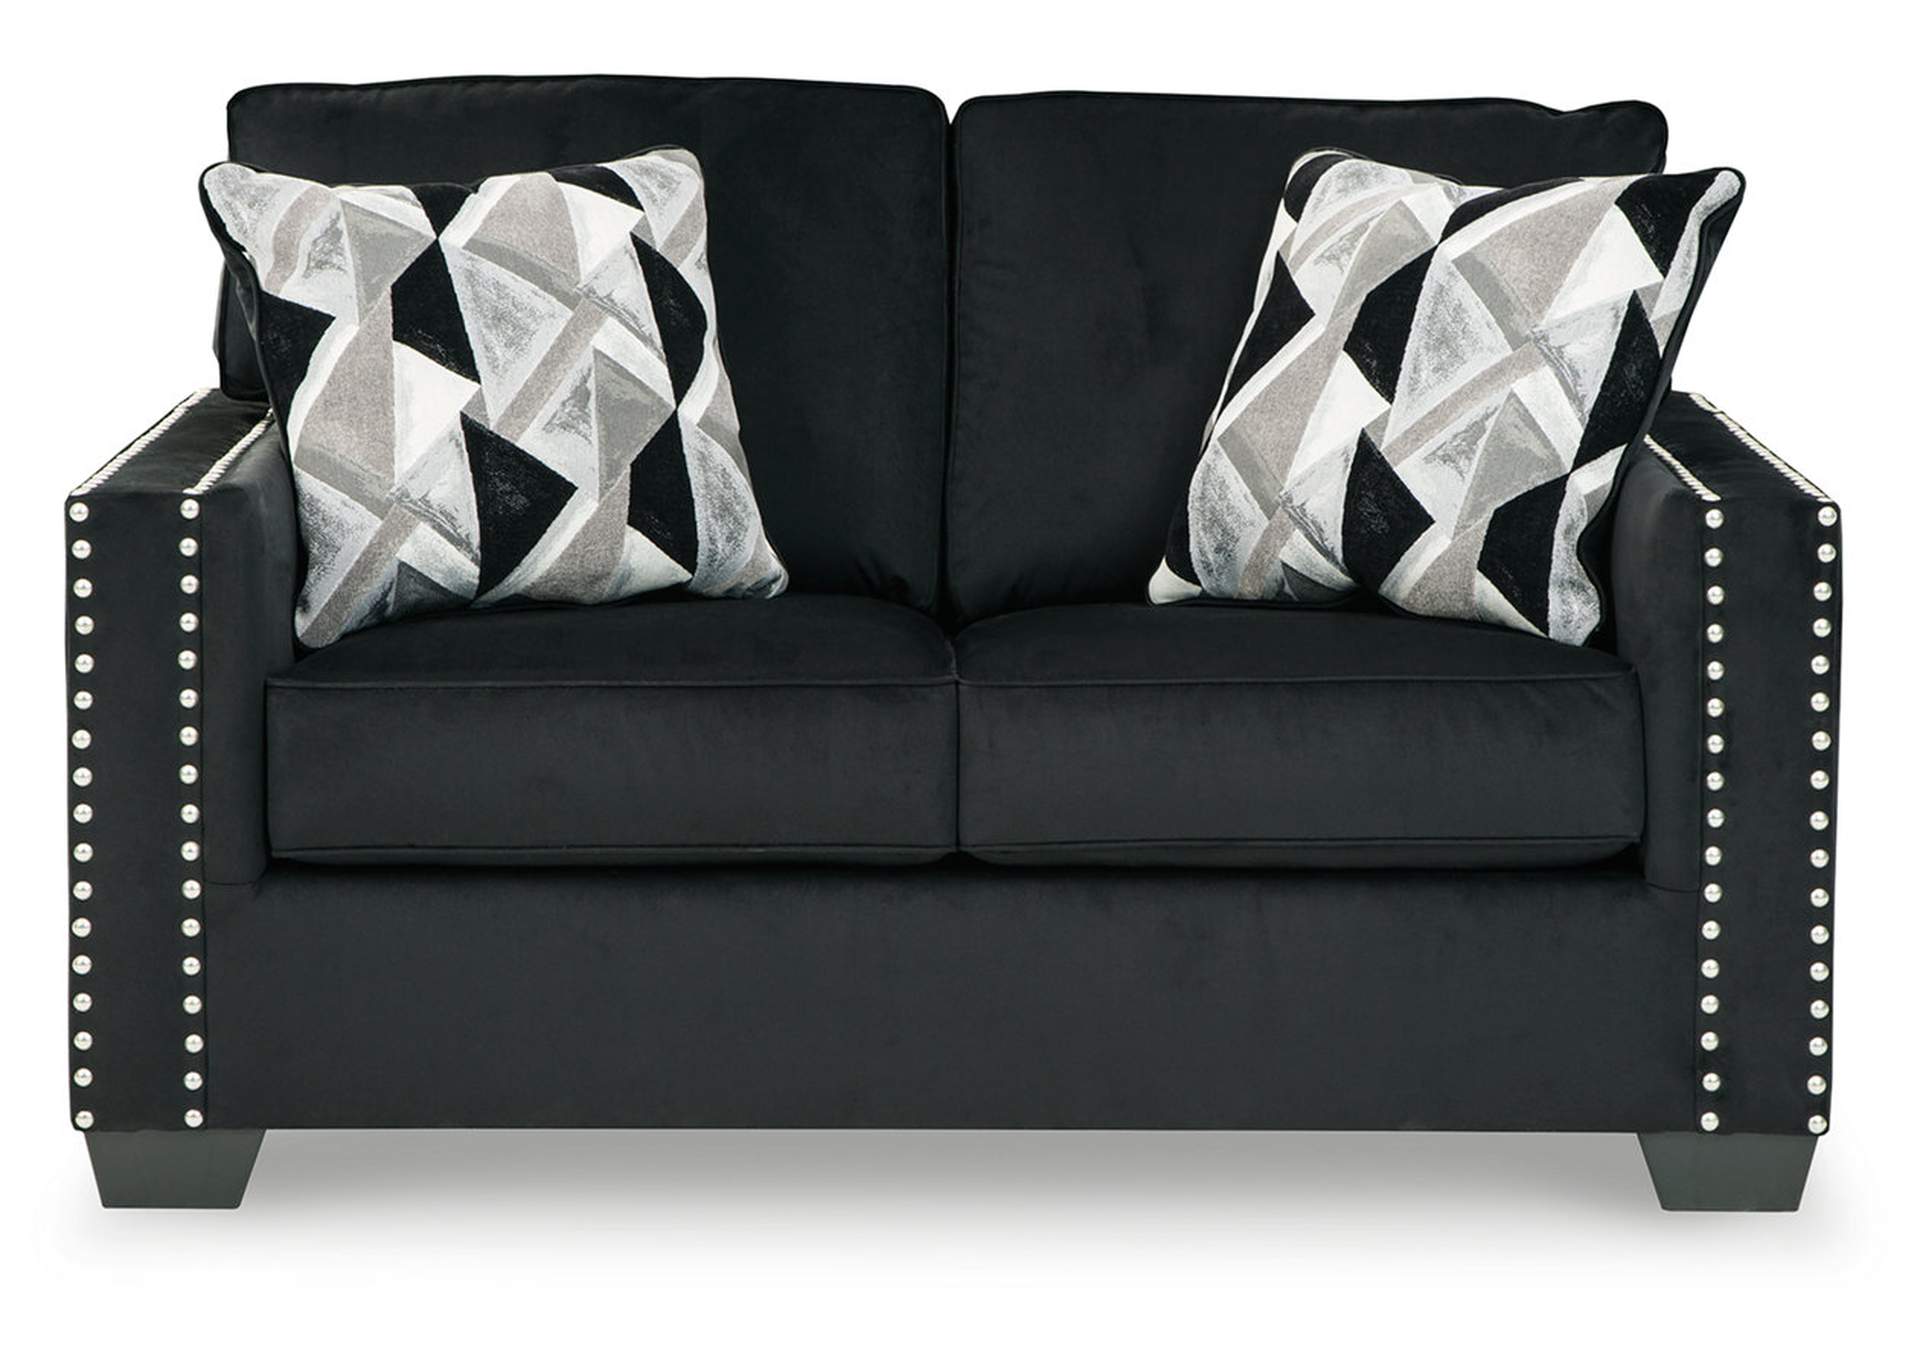 Gleston Sofa, Loveseat, Chair and Ottoman,Signature Design By Ashley